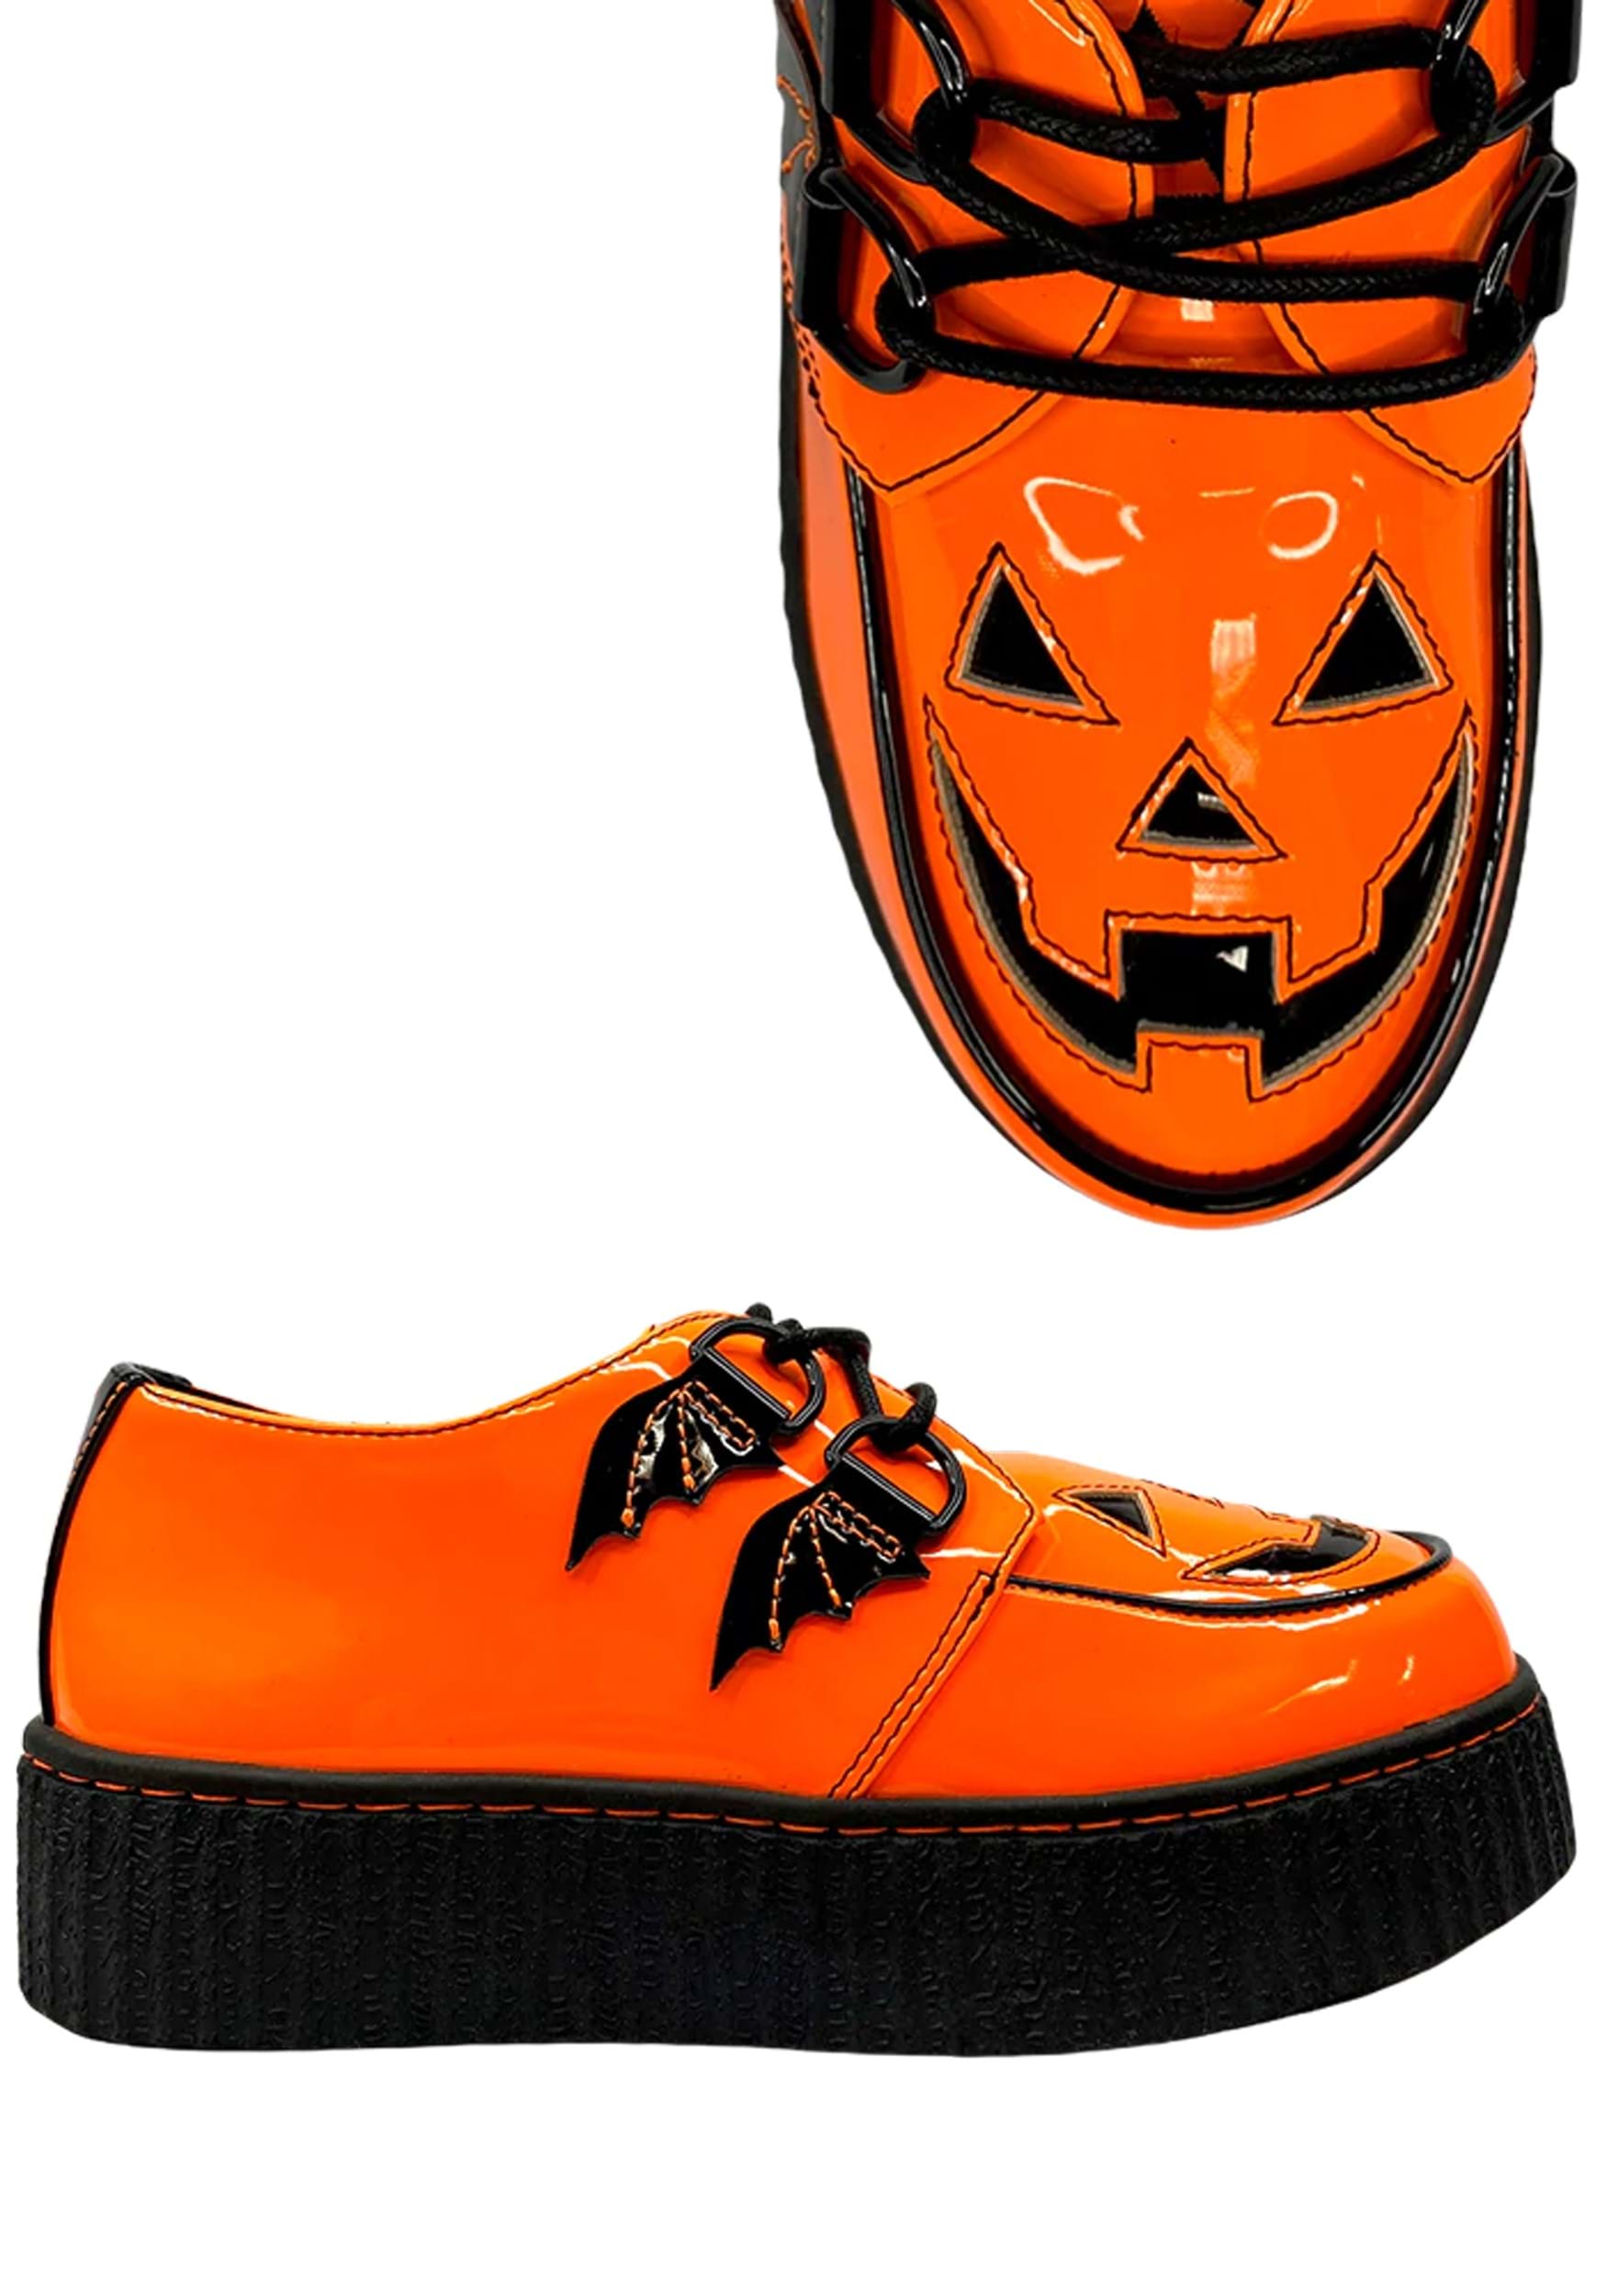 Patent Orange Jack O’ Lantern Creeper Shoes